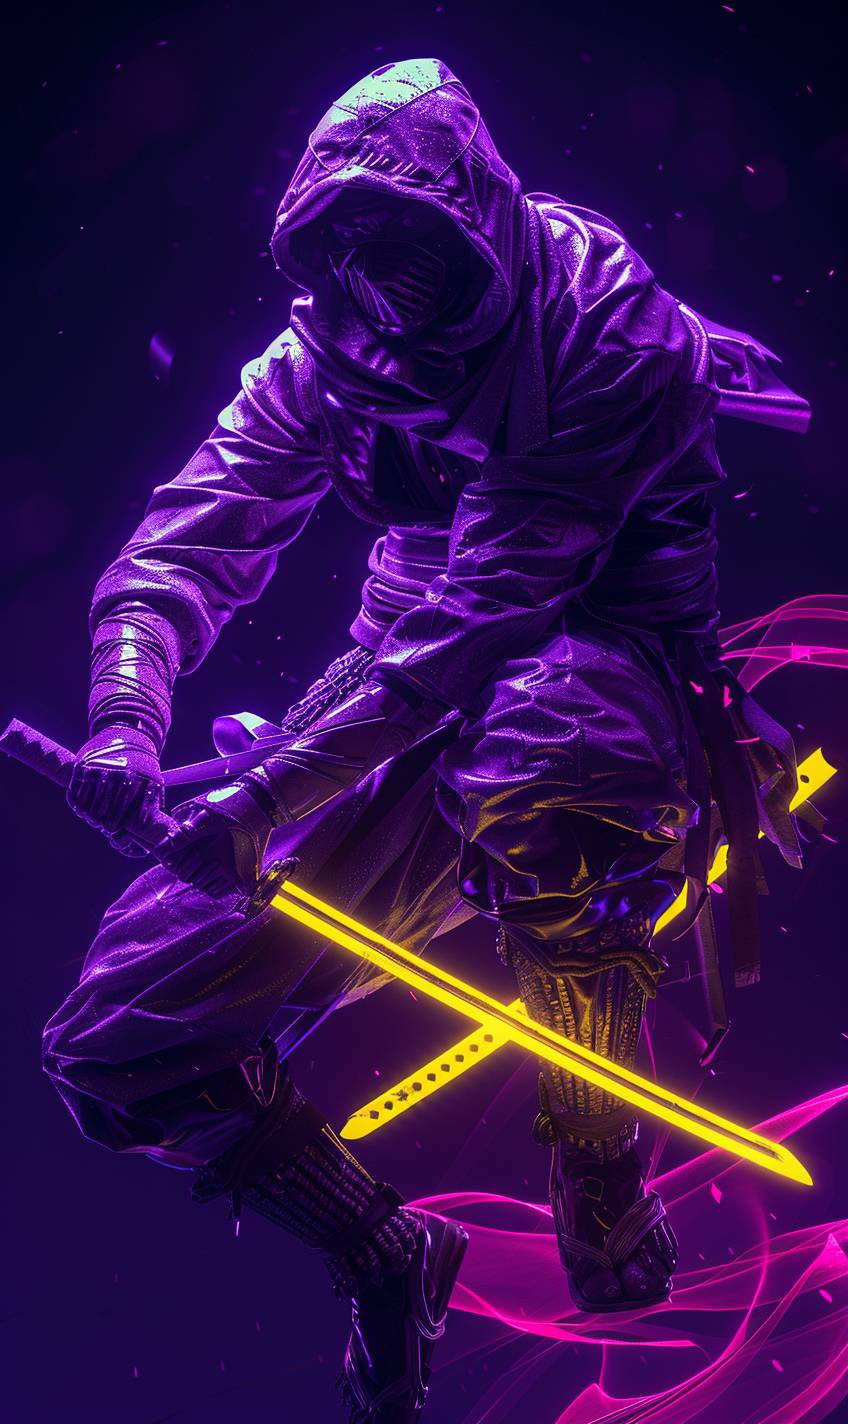 Ninja, Moebius anime, purple dark background, volumetric yellow shadow play. Ray tracing. Hdr. High contrast. Surreal aesthetics. Centric --ar 3:5 --v 6.0